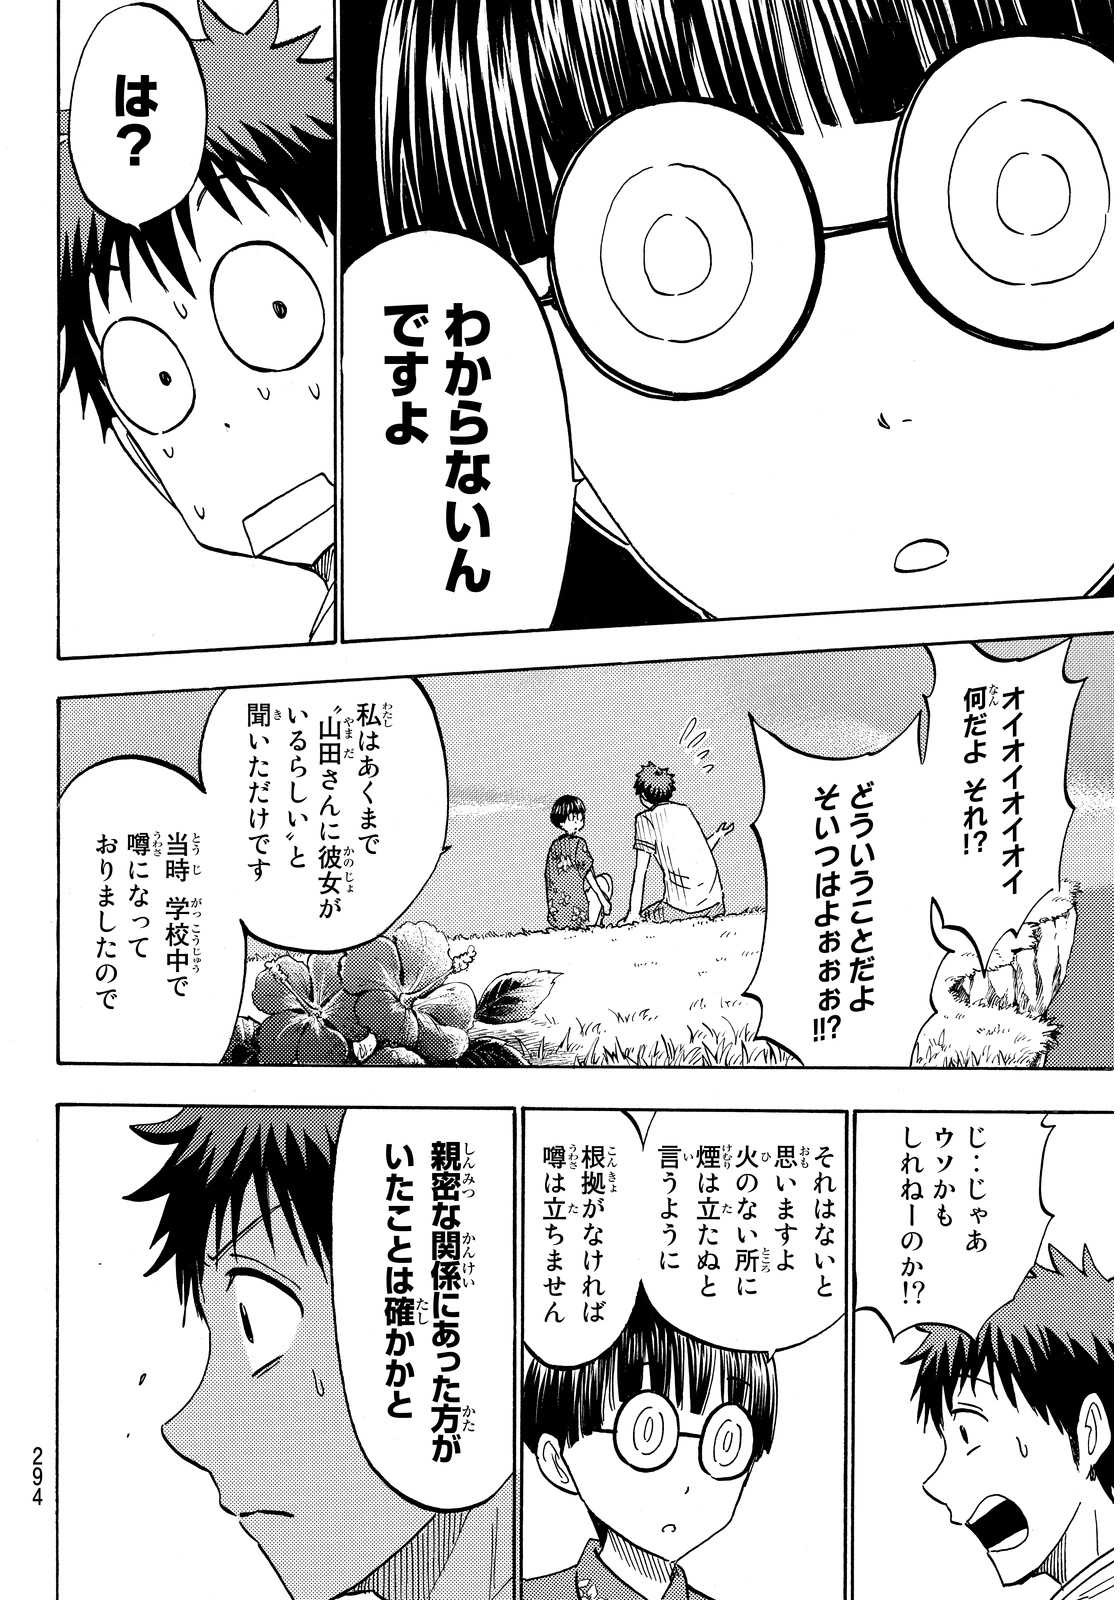 Yamada-kun to 7-nin no Majo - Chapter 203 - Page 4